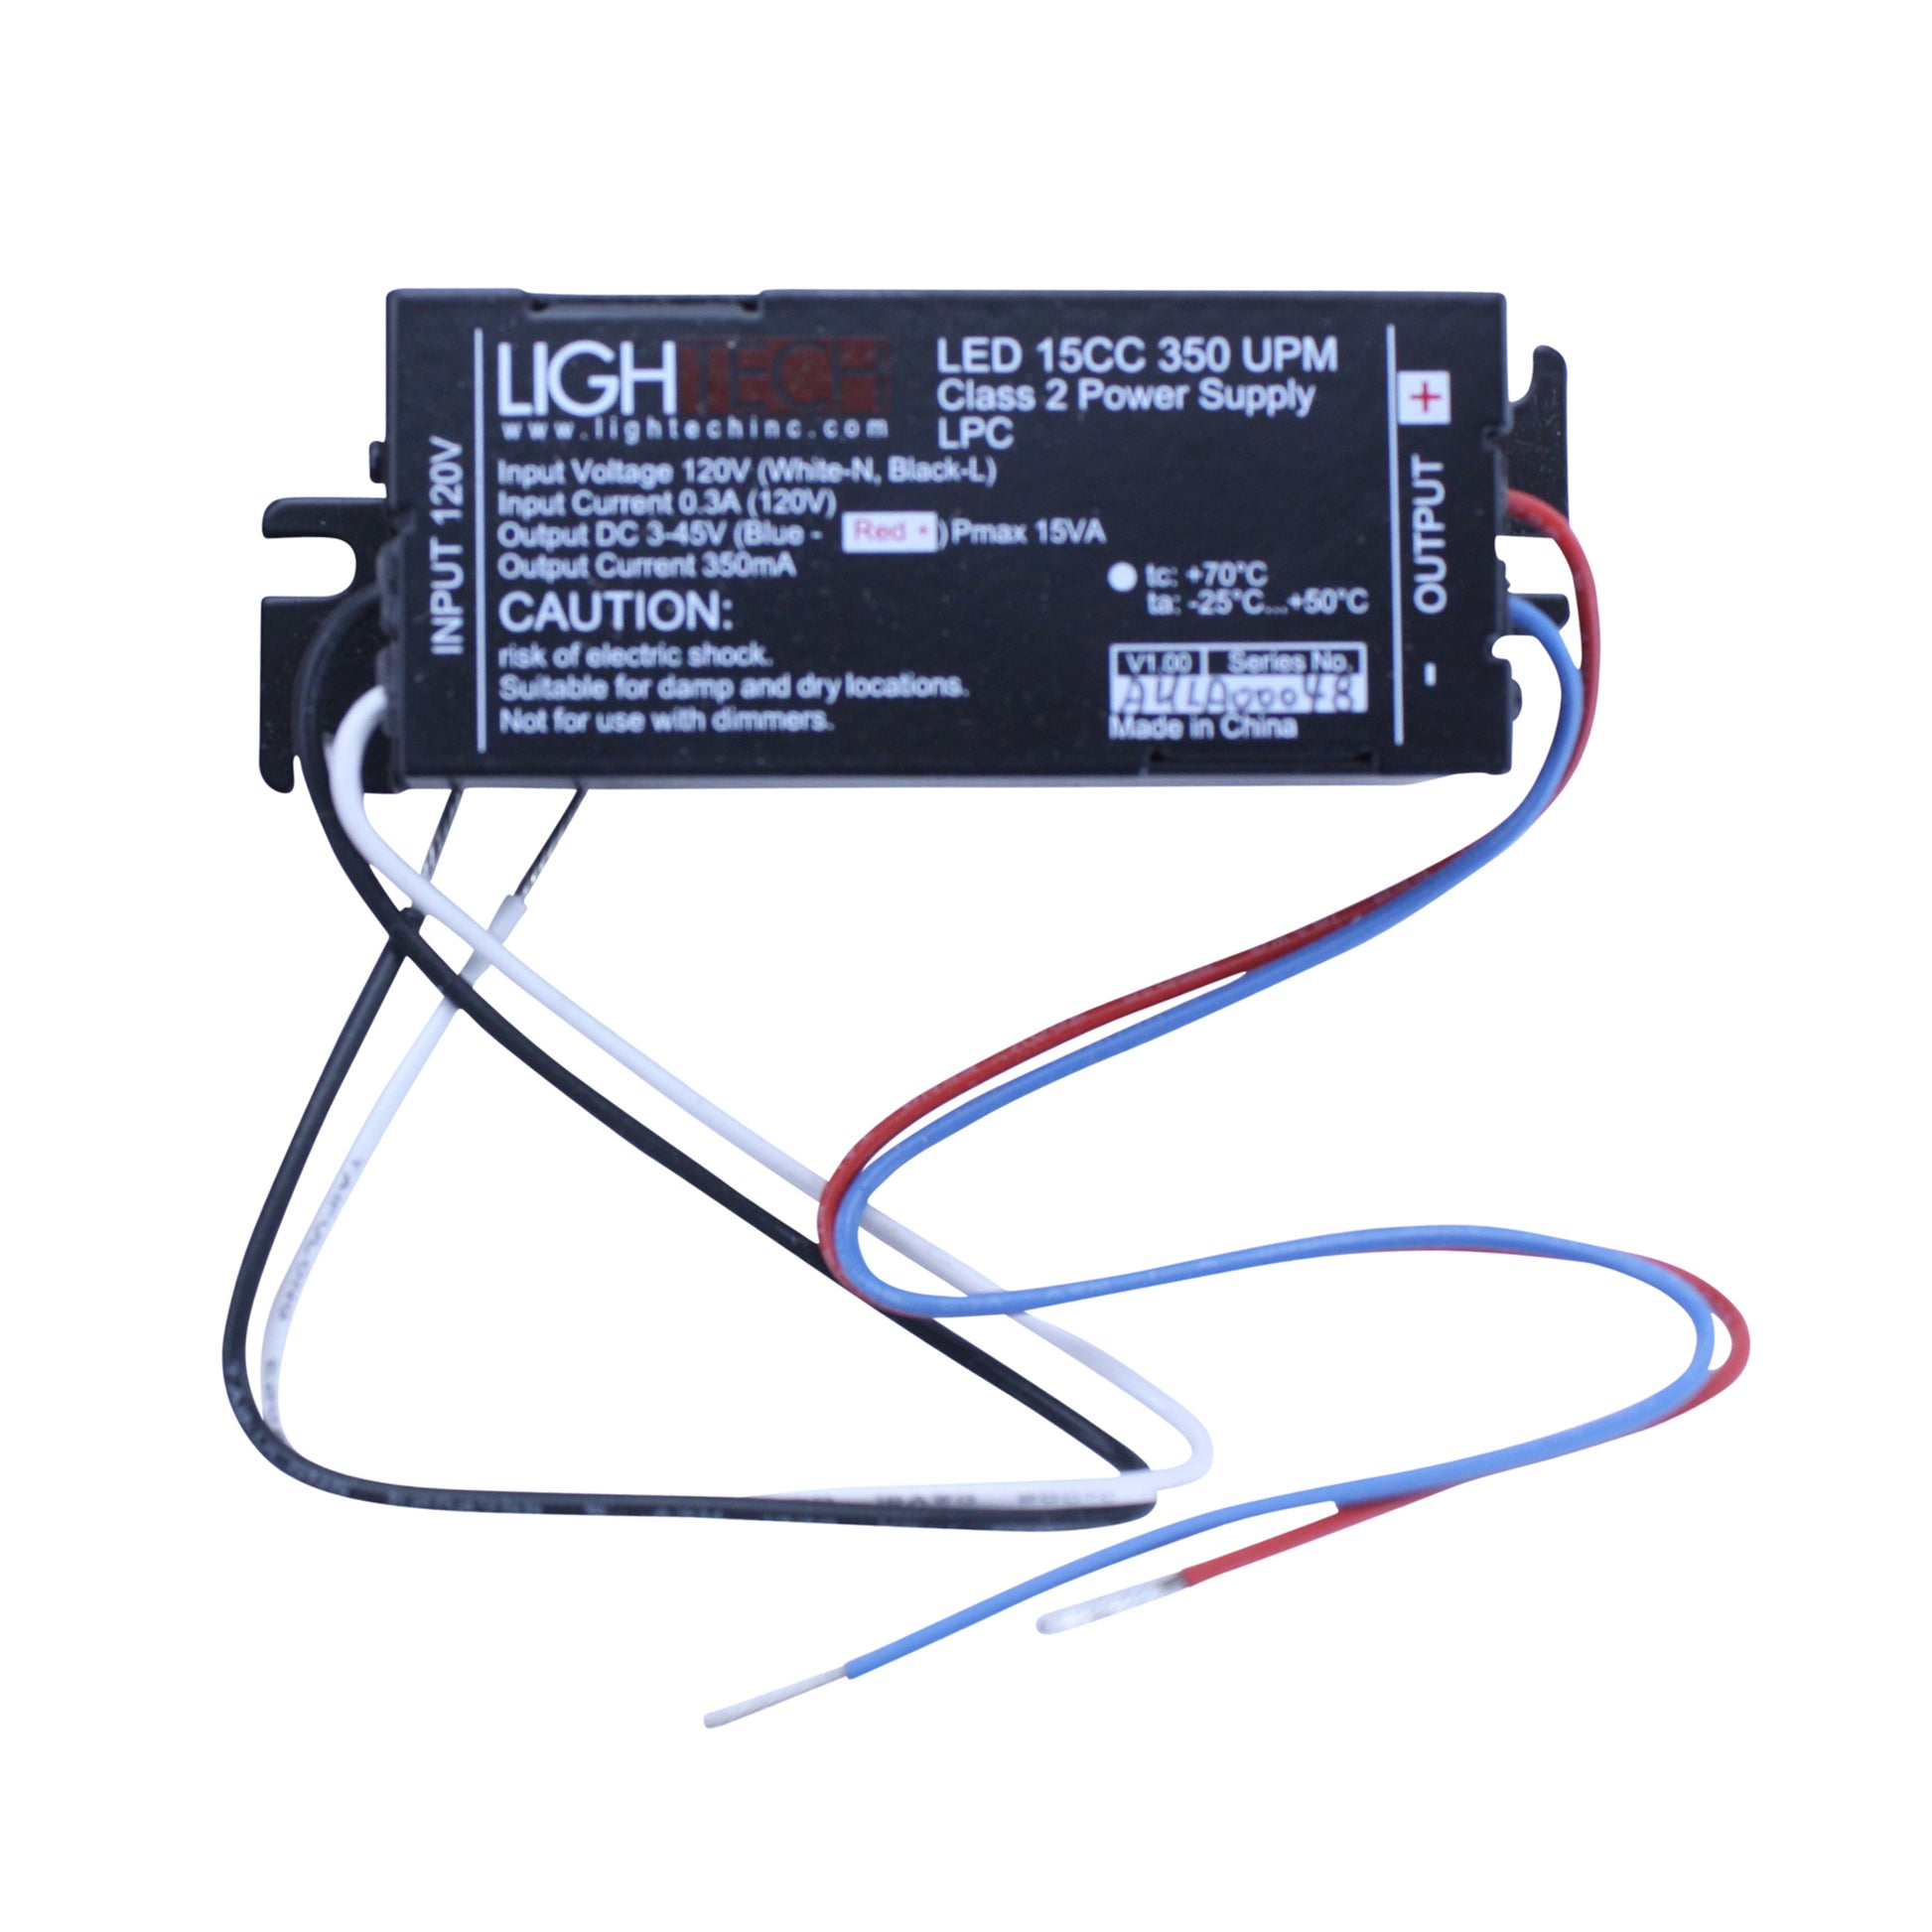 Lightech LED-15CC-350-UPM